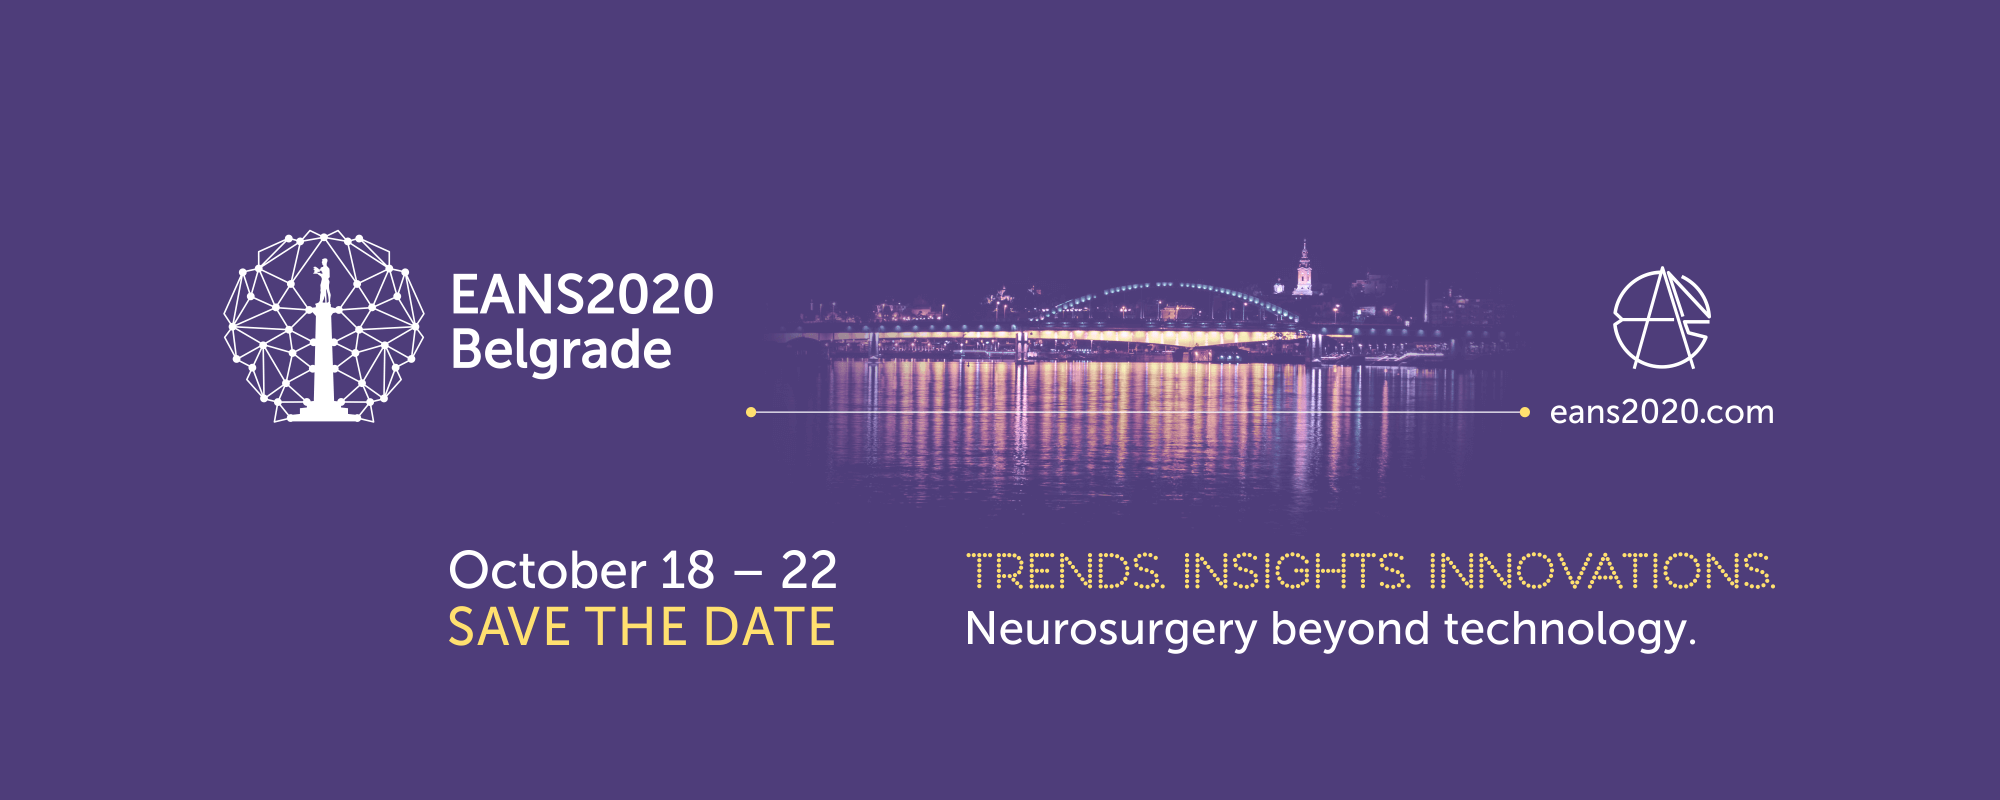 European Association of Neurosurgical Societies EANS 2020 Congress